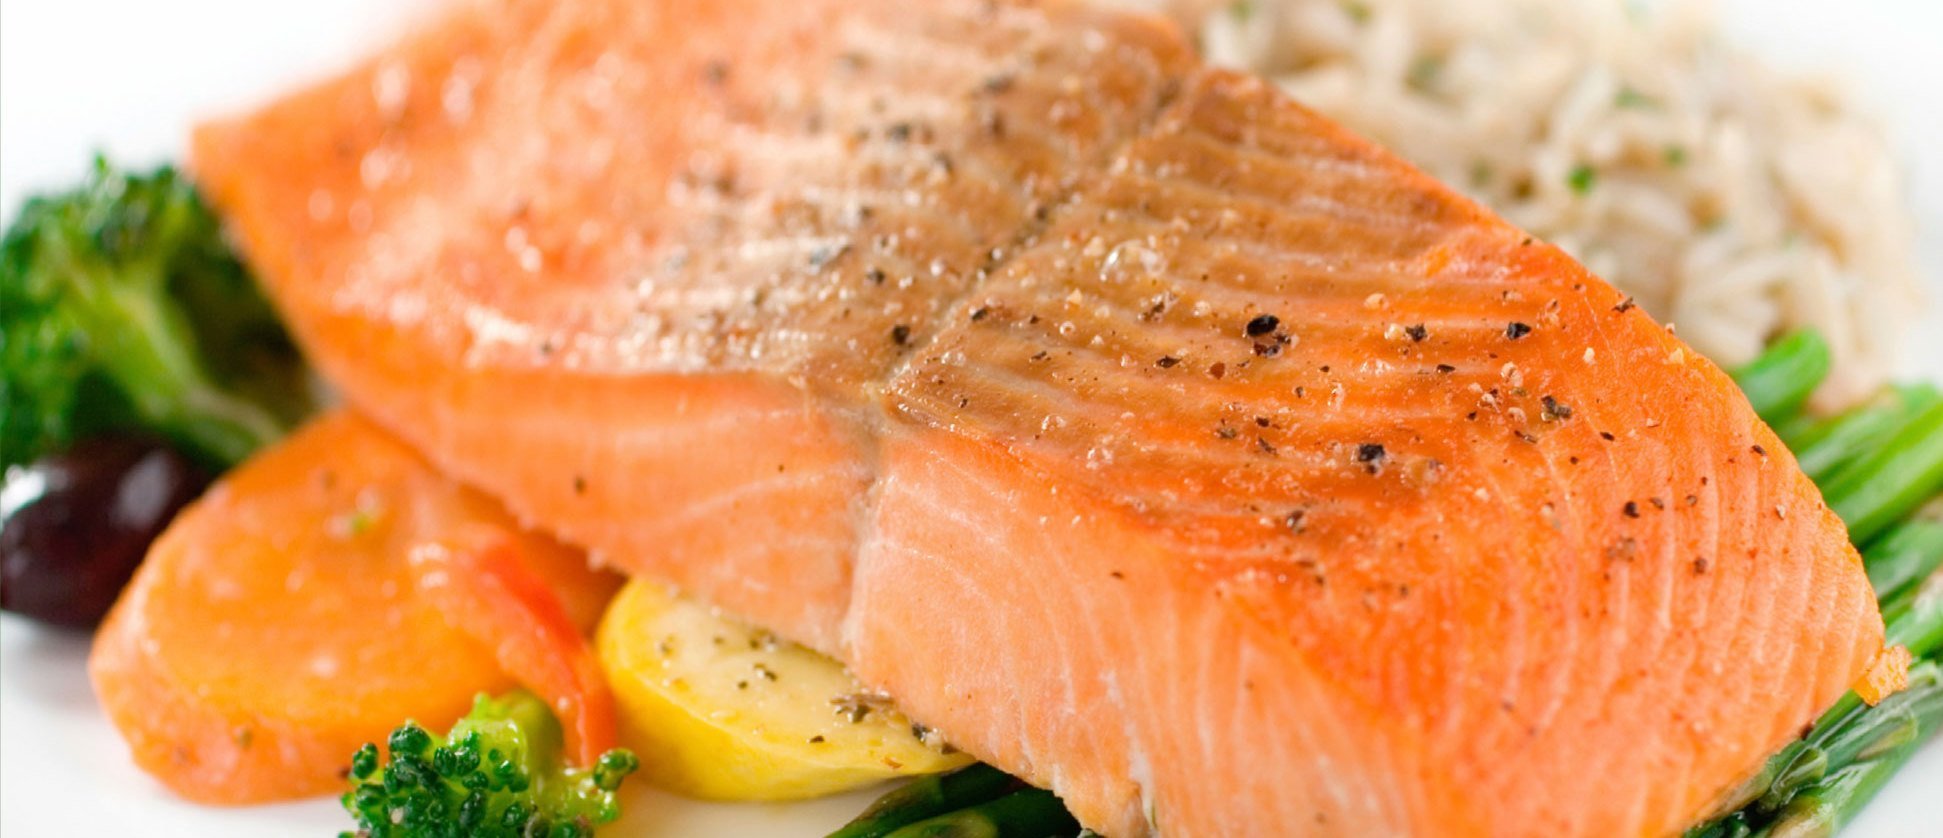 Health Benefits Of Omega 3 Fatty Acids Salmon E1410694147134 مجلة نقطة العلمية